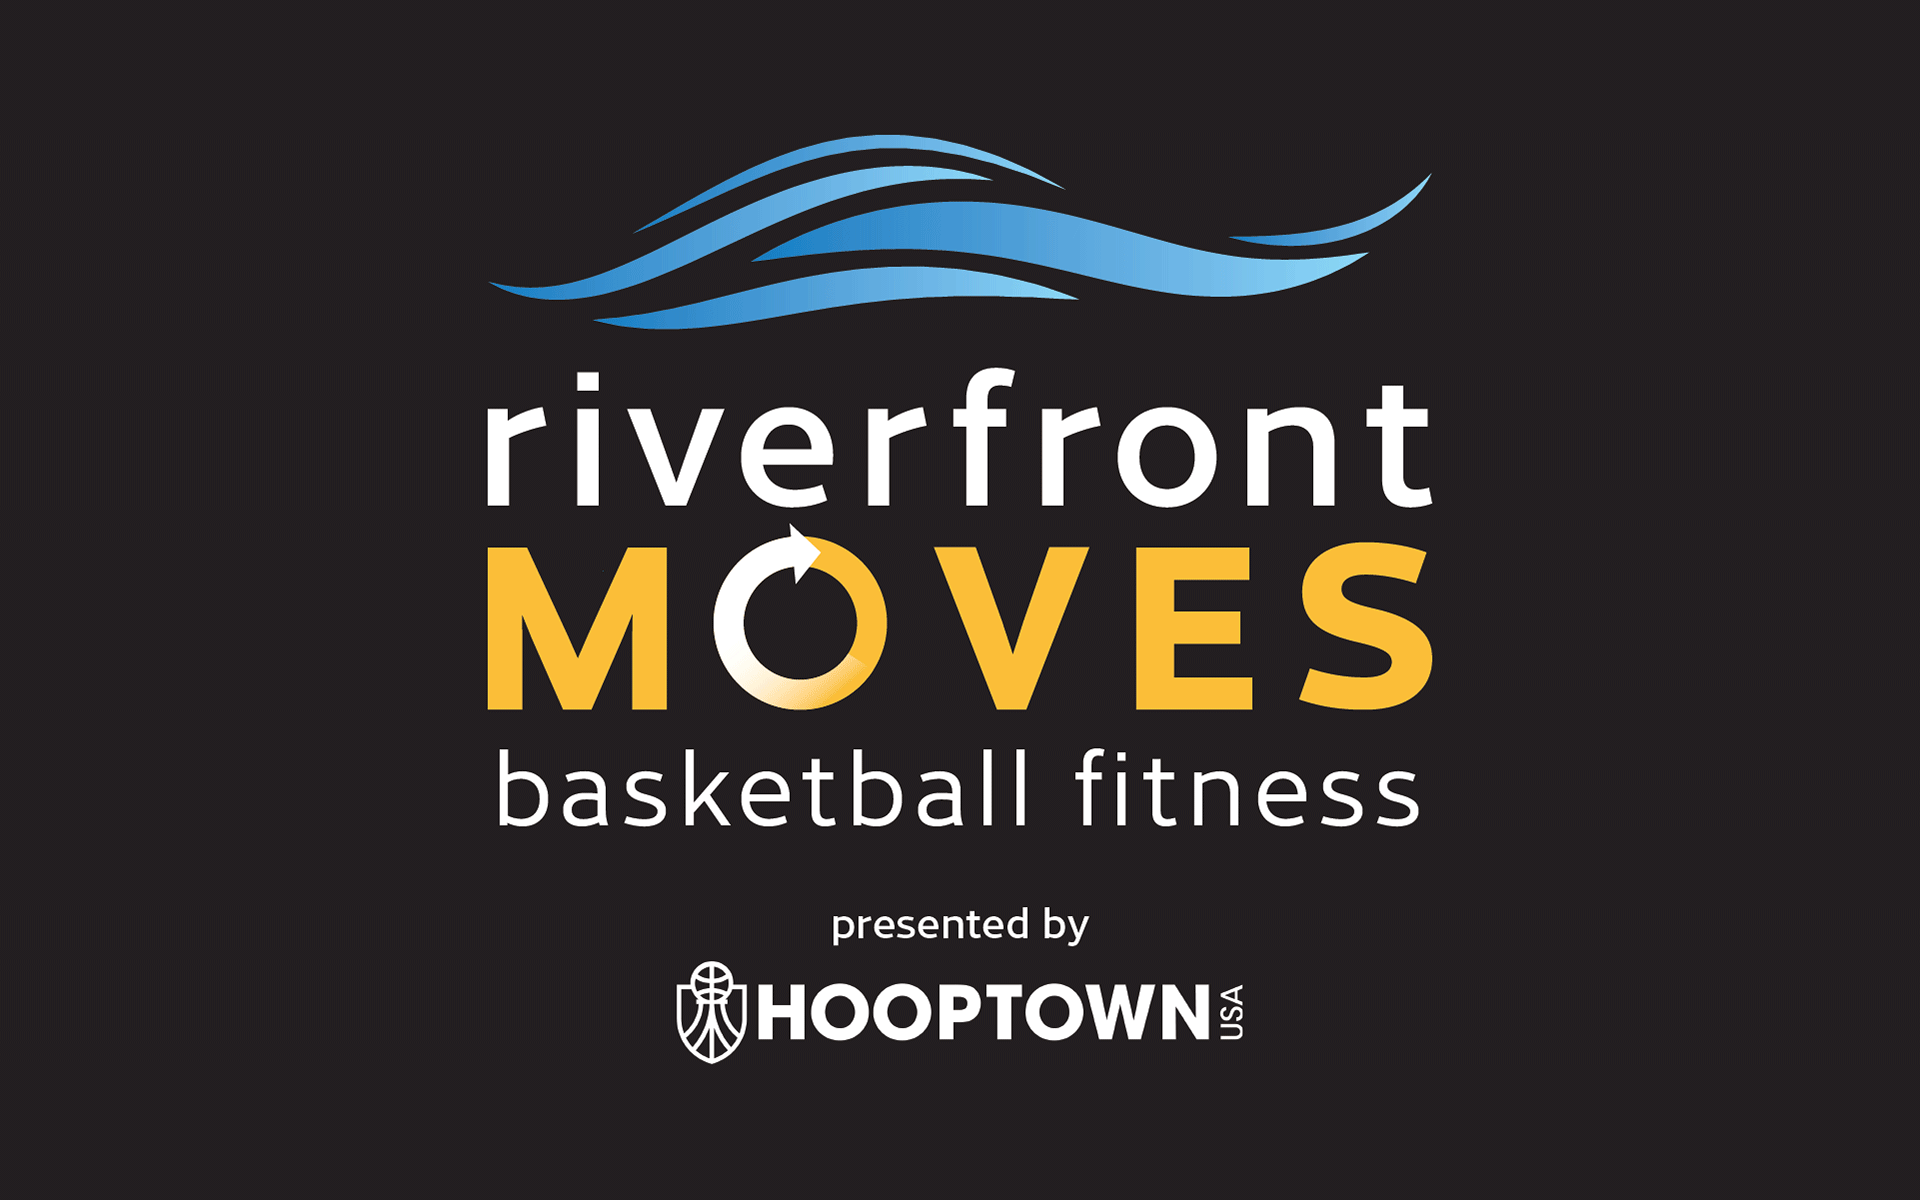 Riverfront Moves - The Core Four, Hype, Strike, Sculpt - City of Spokane,  Washington